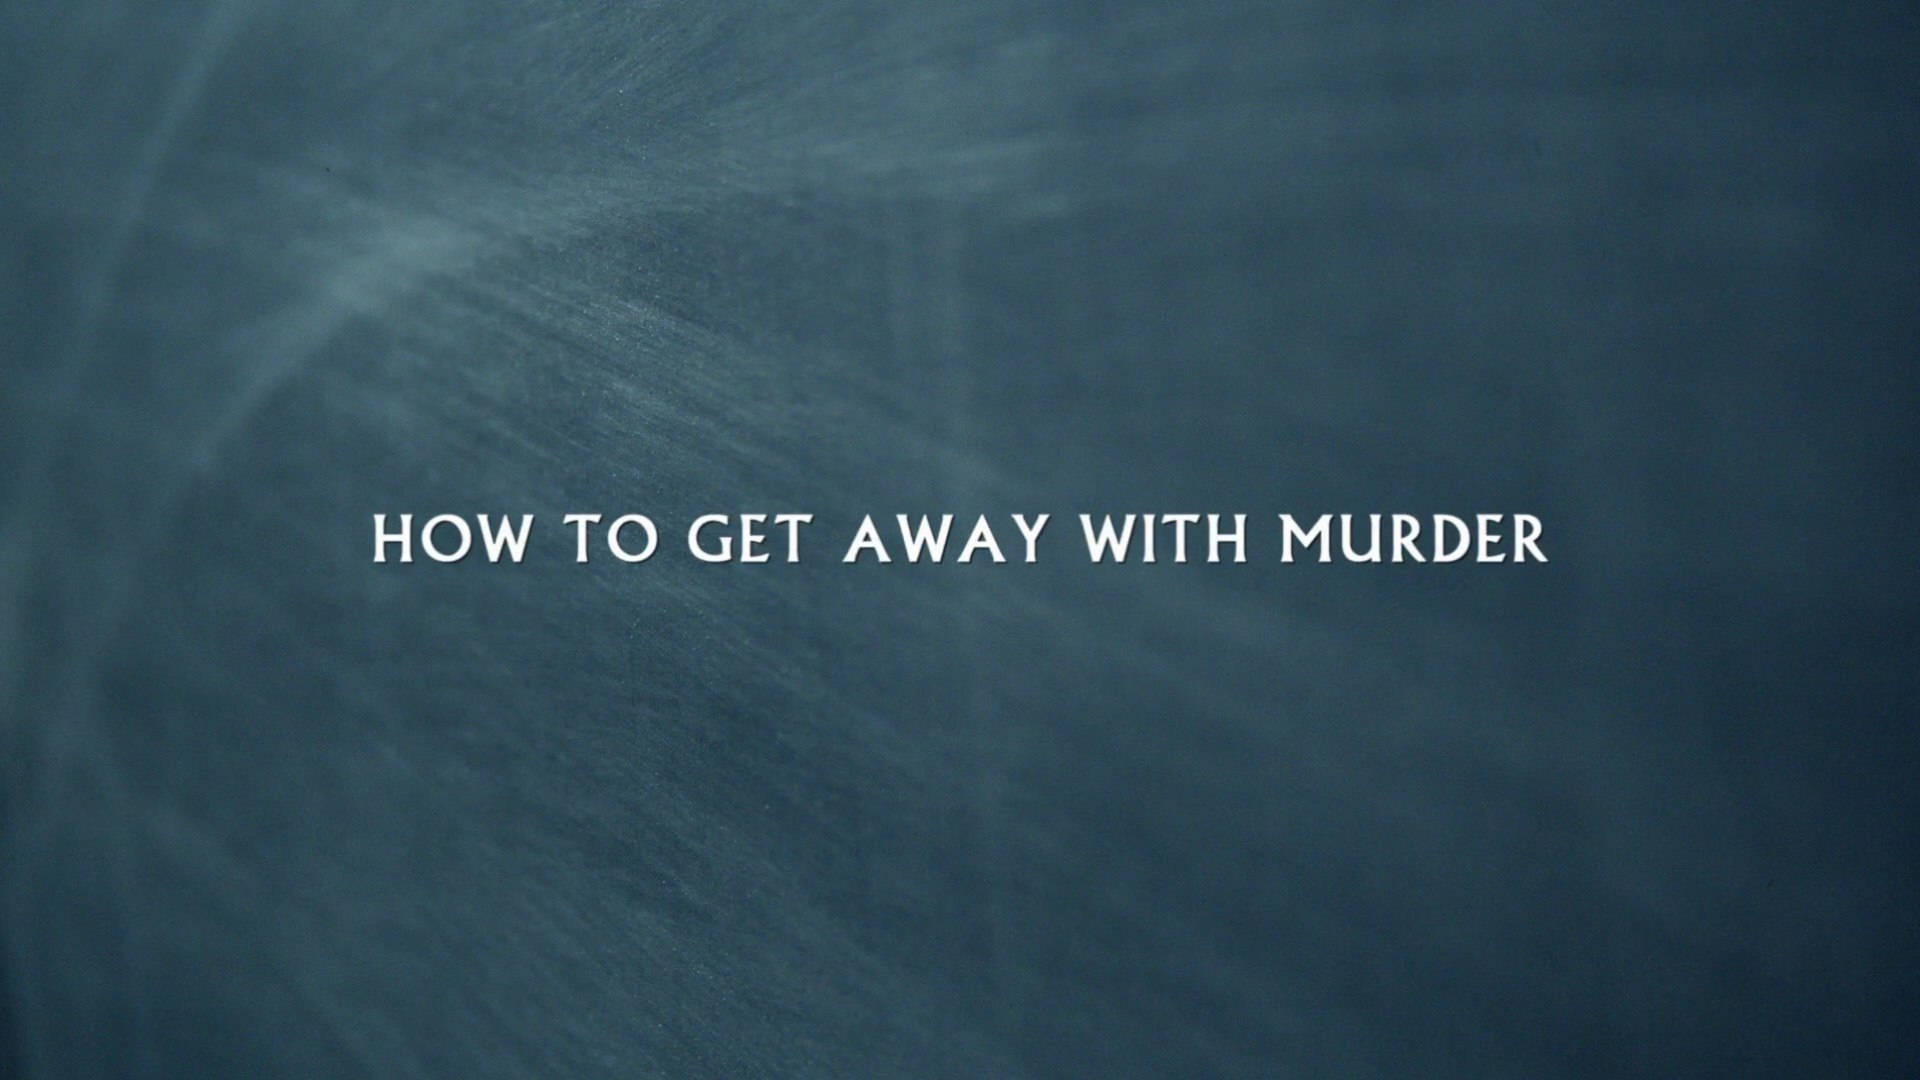 Download How To Get Away With Murder Blackboard Wallpaper | Wallpapers.com